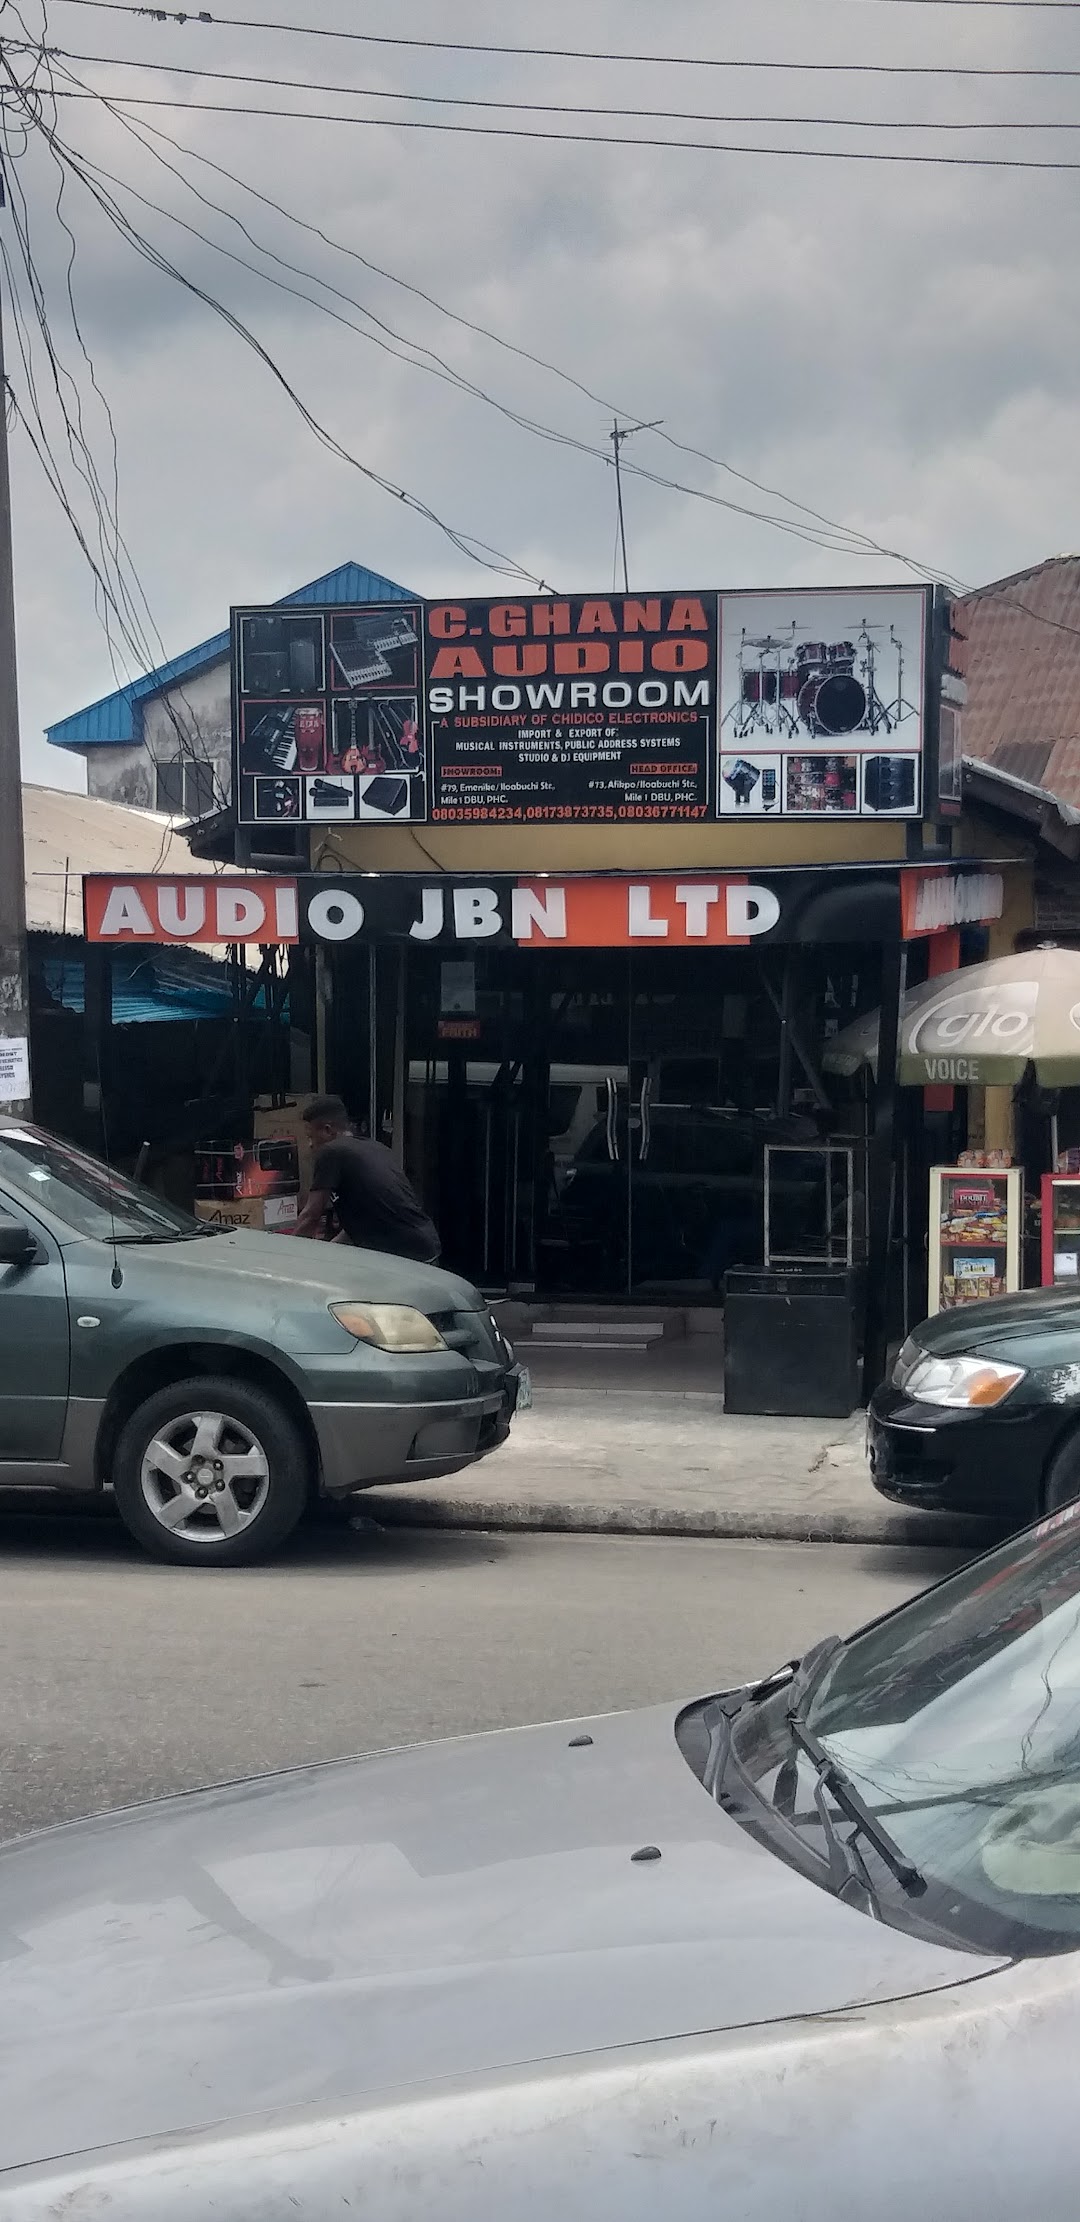 G. Ghana Audio